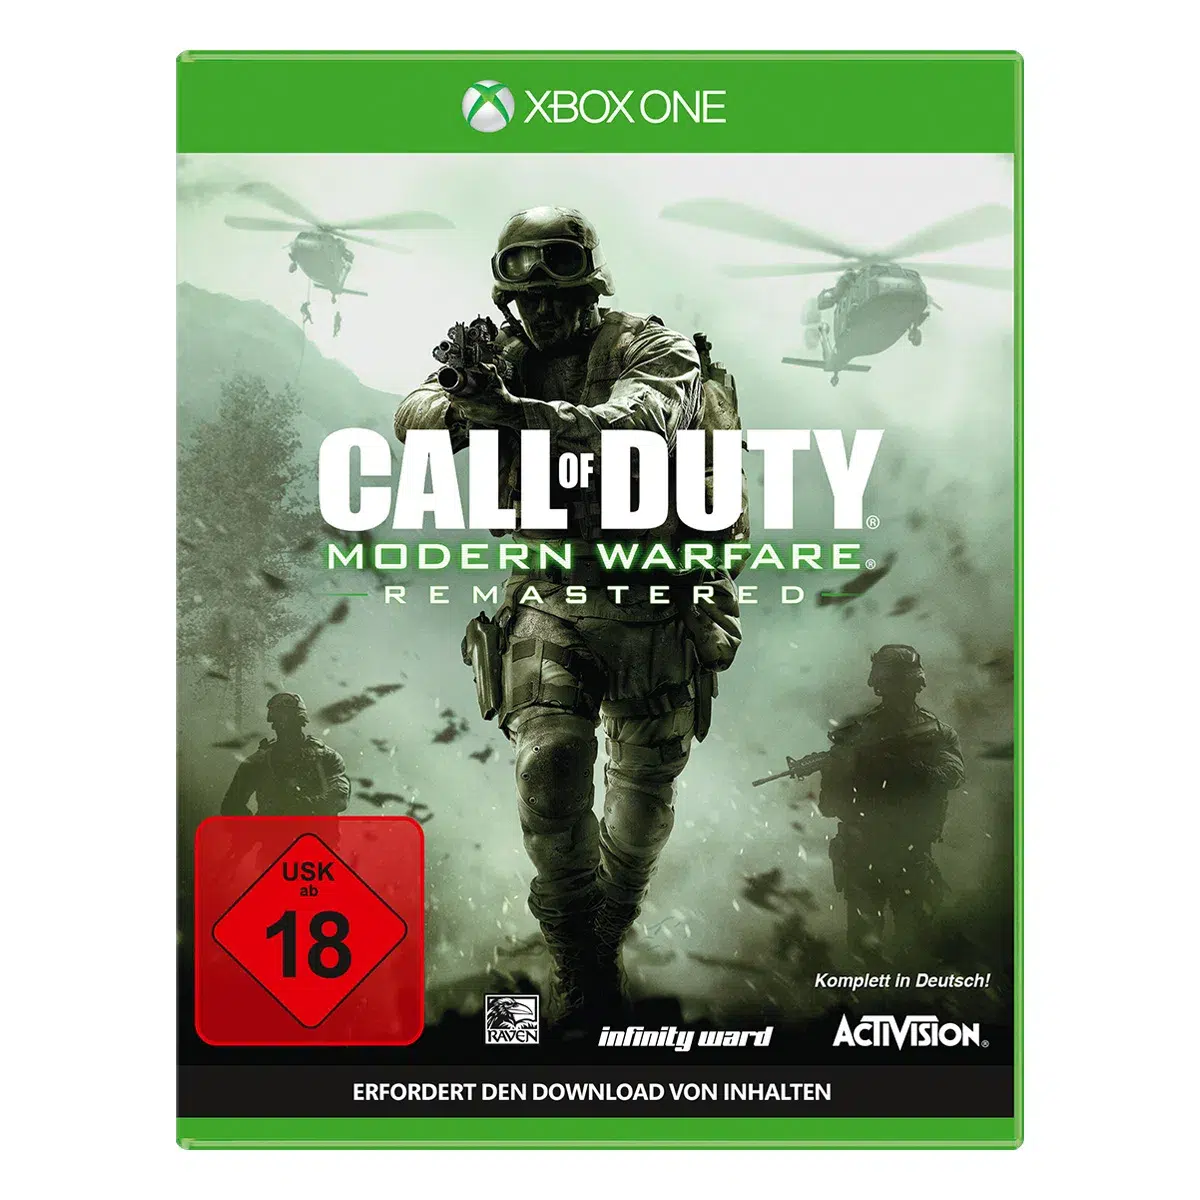 Call of Duty: Modern Warfare Remastered (XONE) (USK)